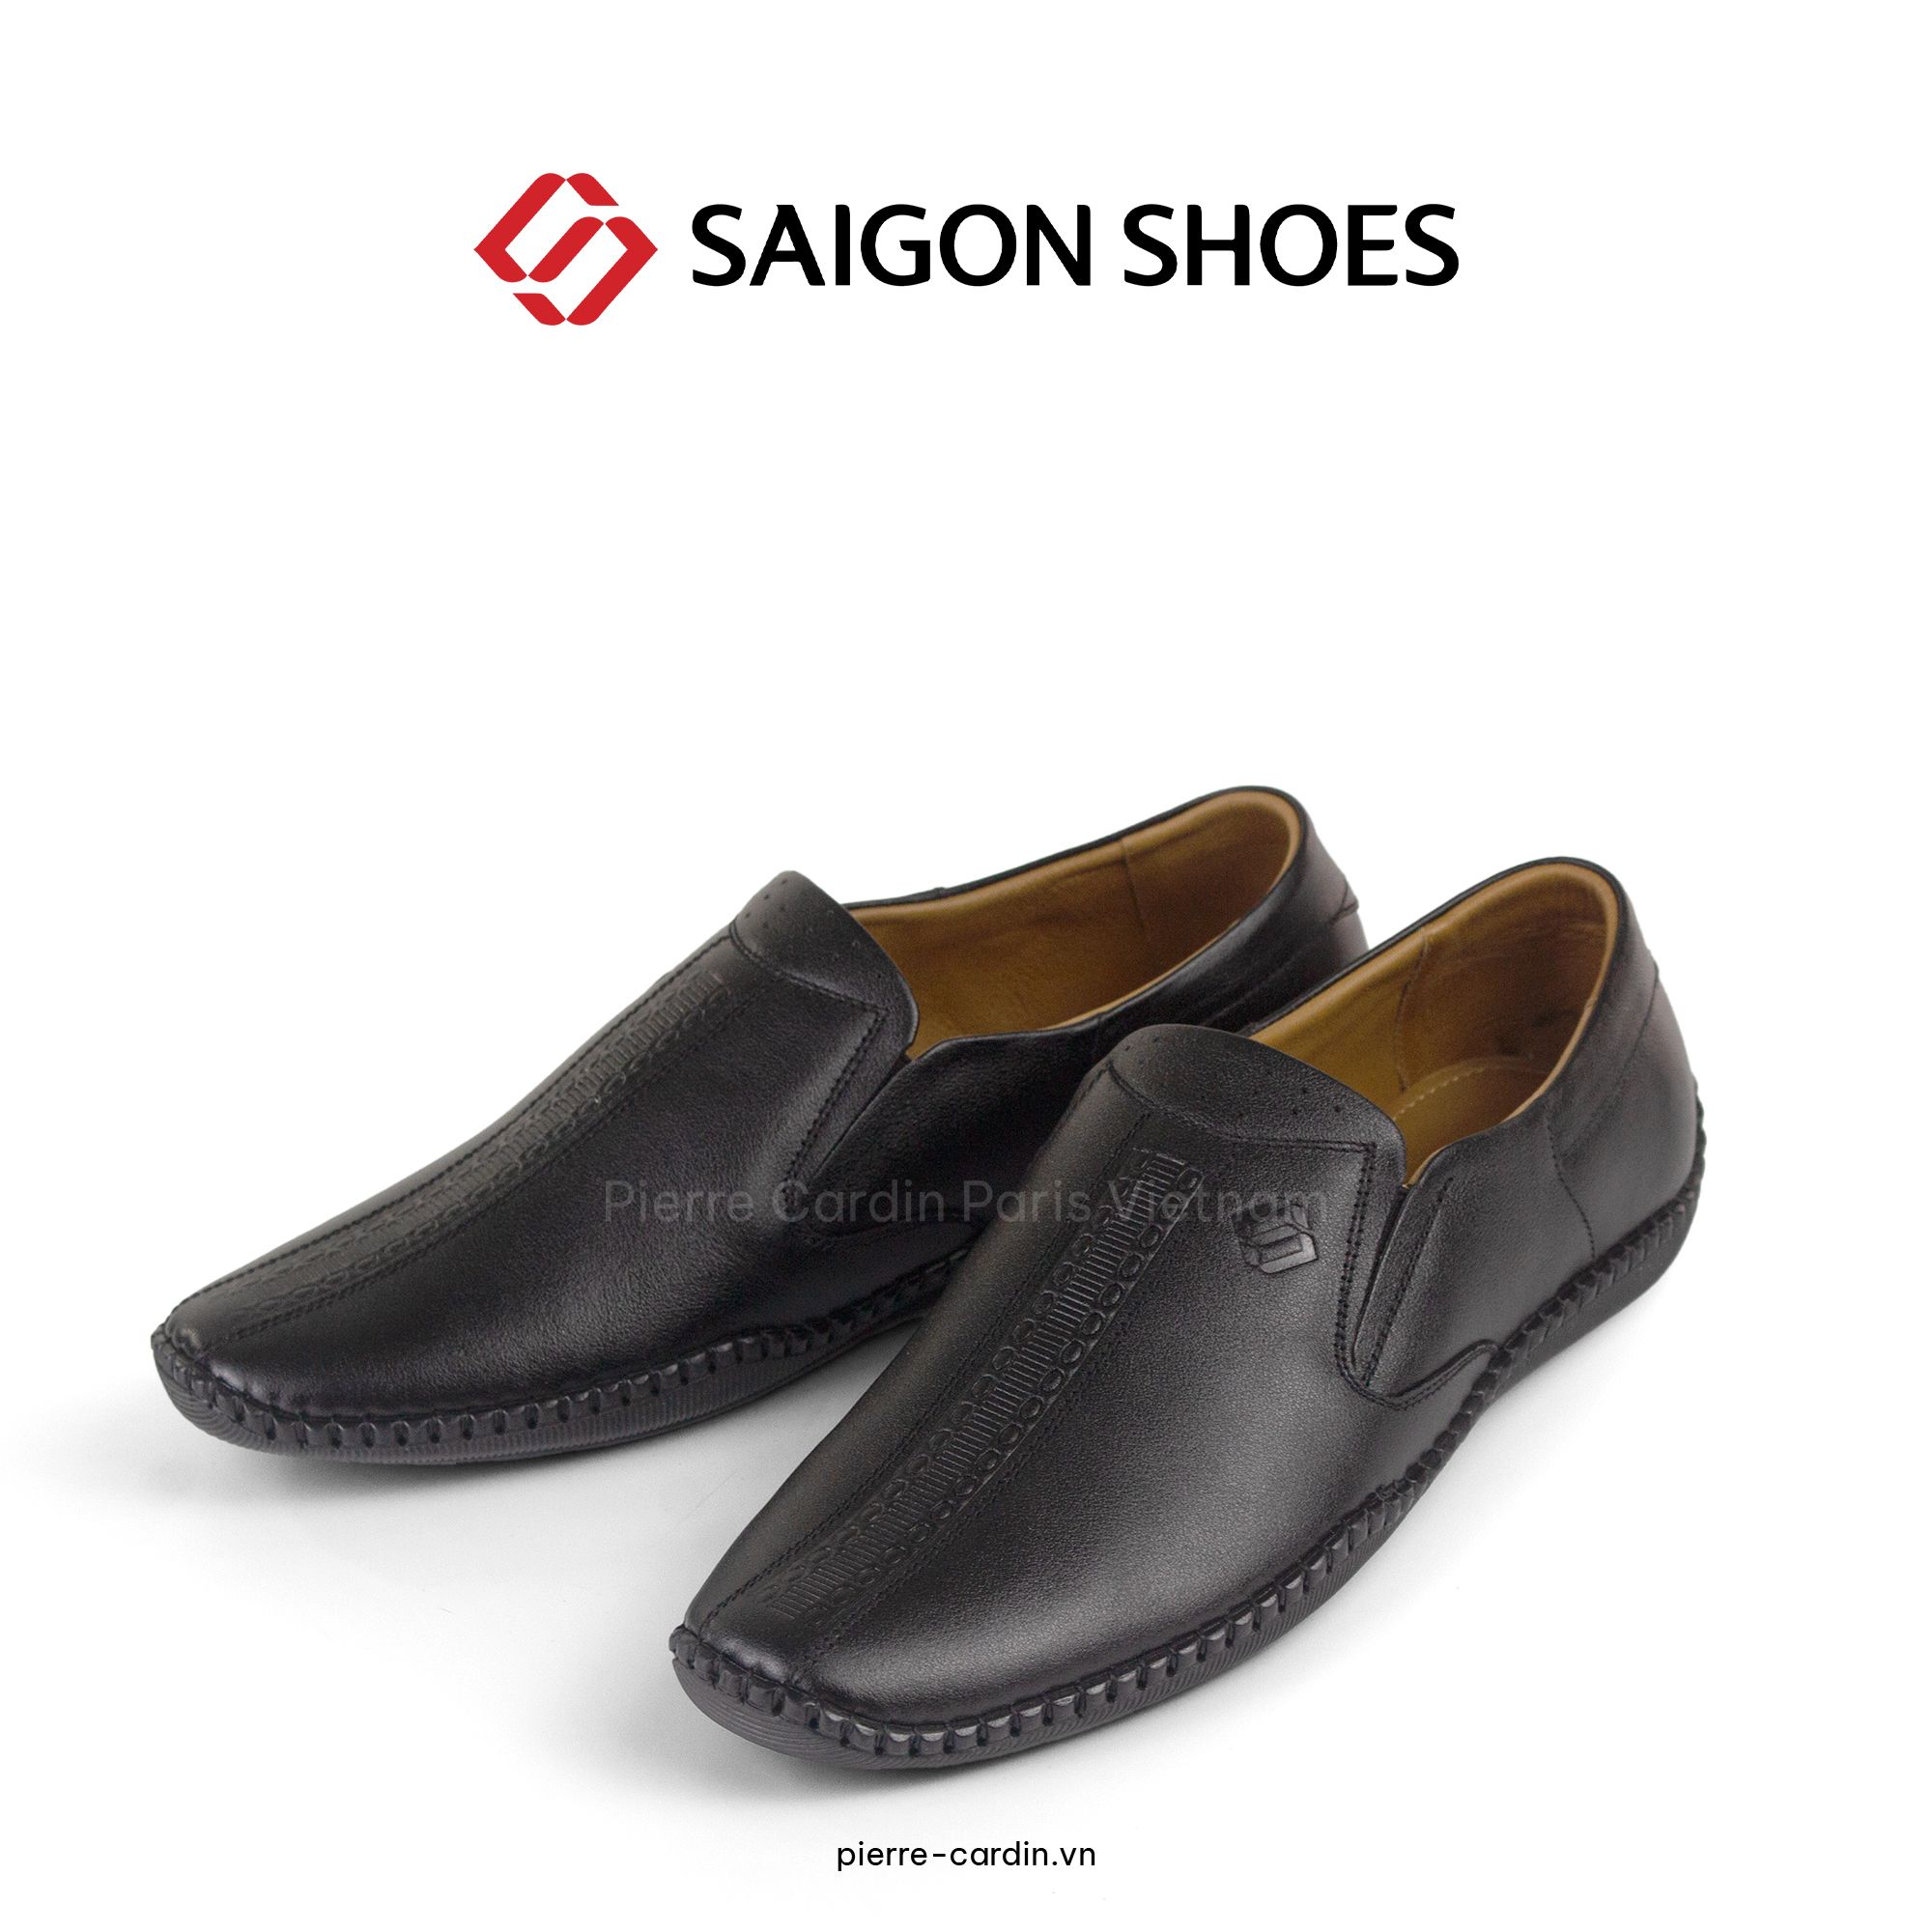 Pierre Cardin Paris Vietnam: Giày Mọi Saigon Shoes - SGMFWLH 001 (BLACK)